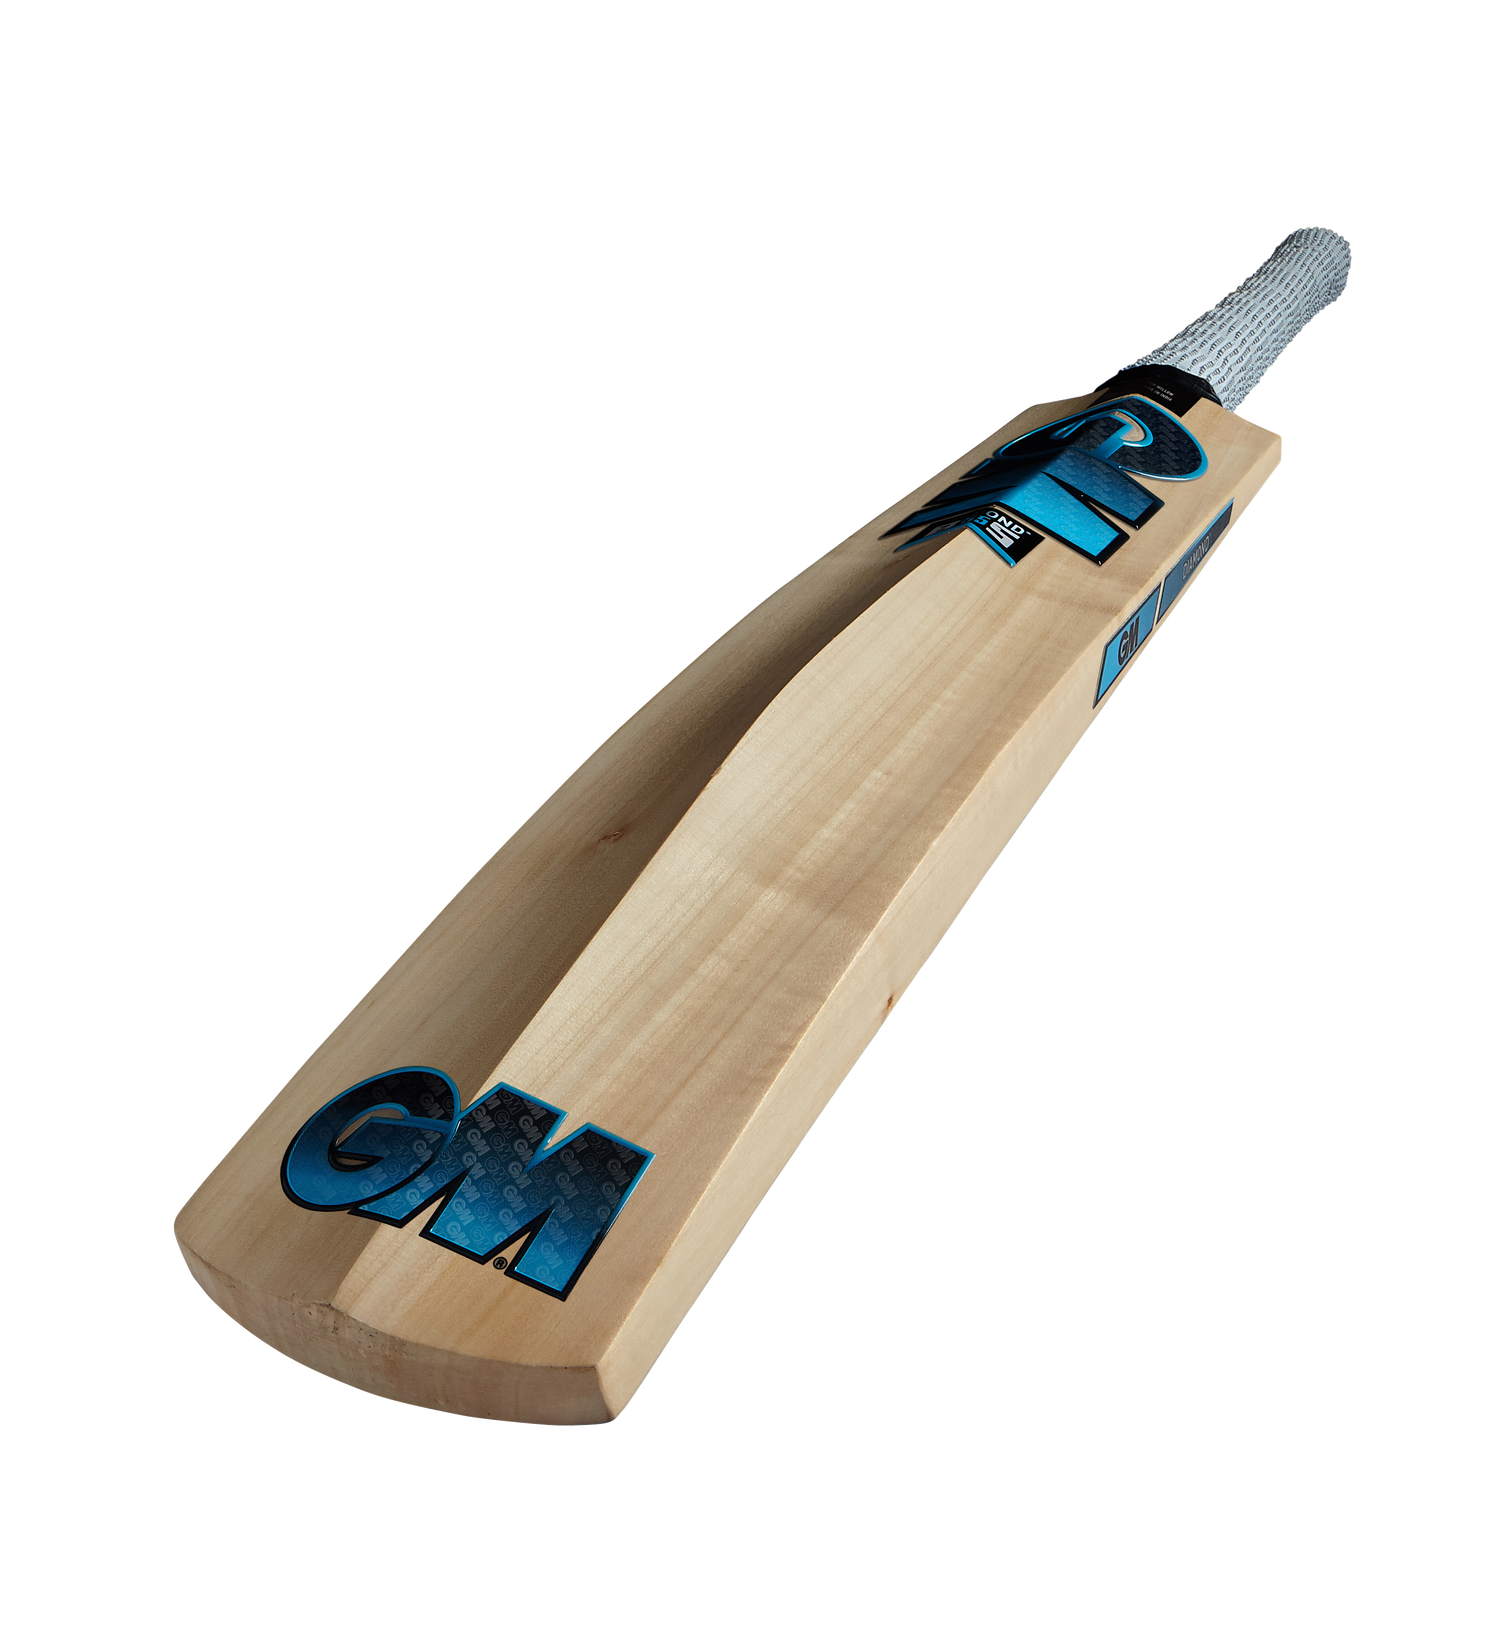 GM Diamond 101 Kashmir Willow Junior Cricket Bat